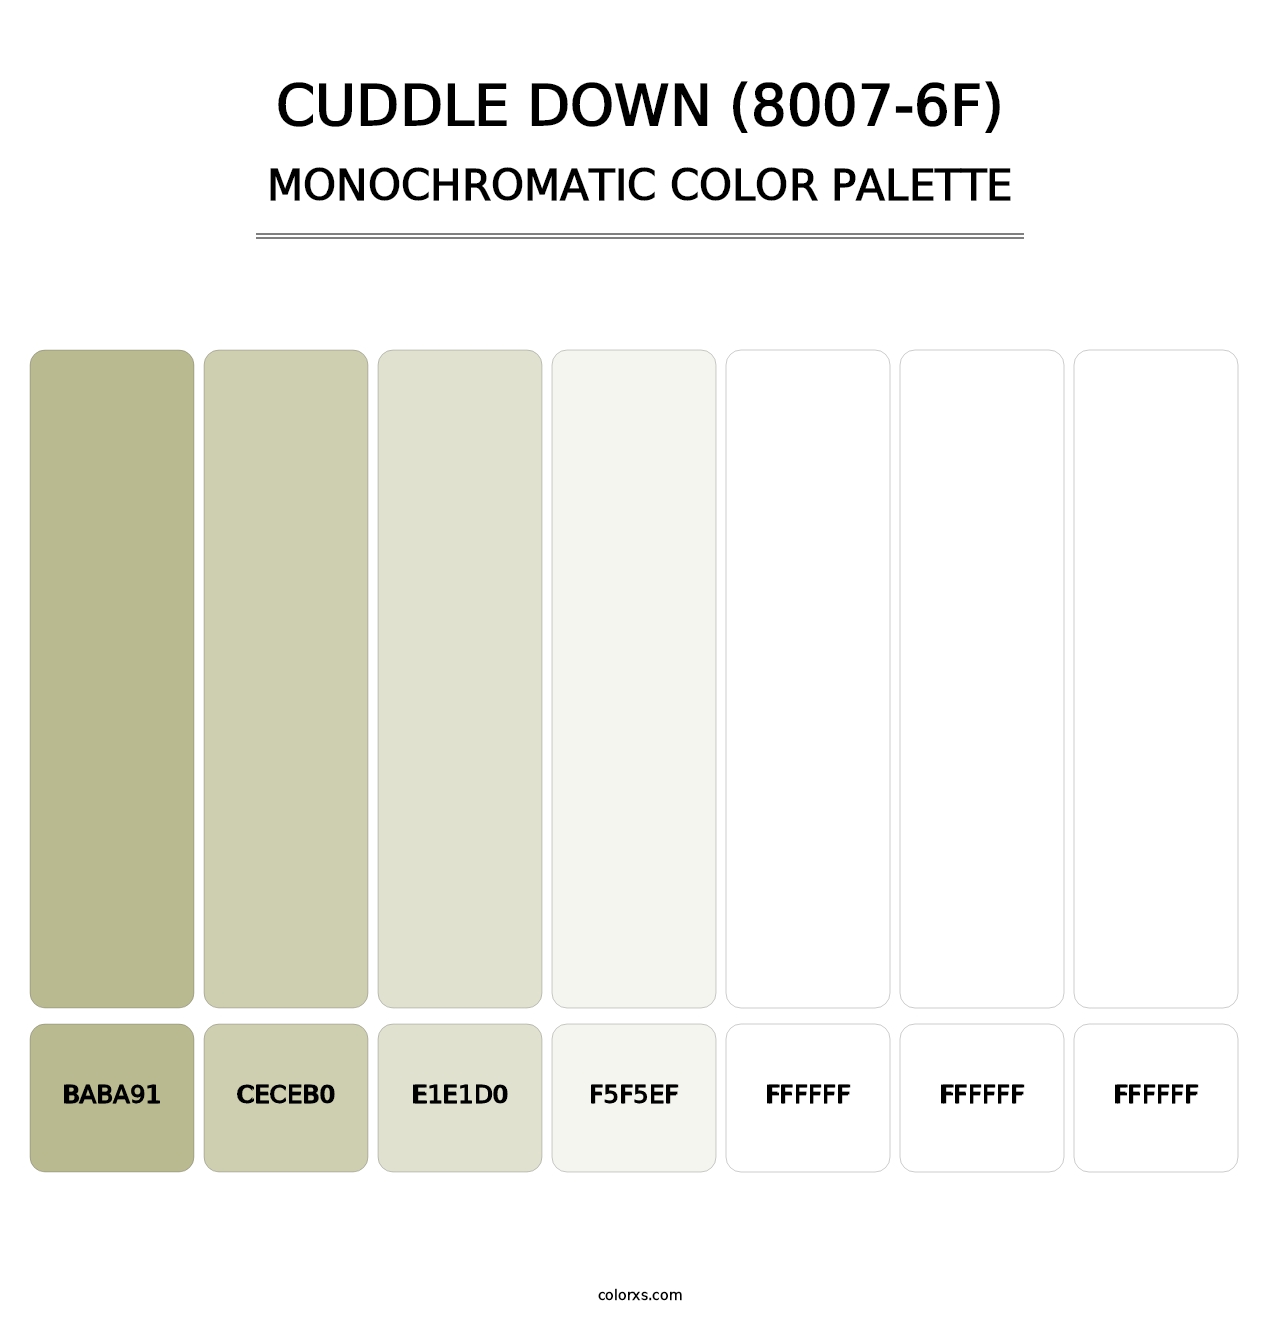 Cuddle Down (8007-6F) - Monochromatic Color Palette